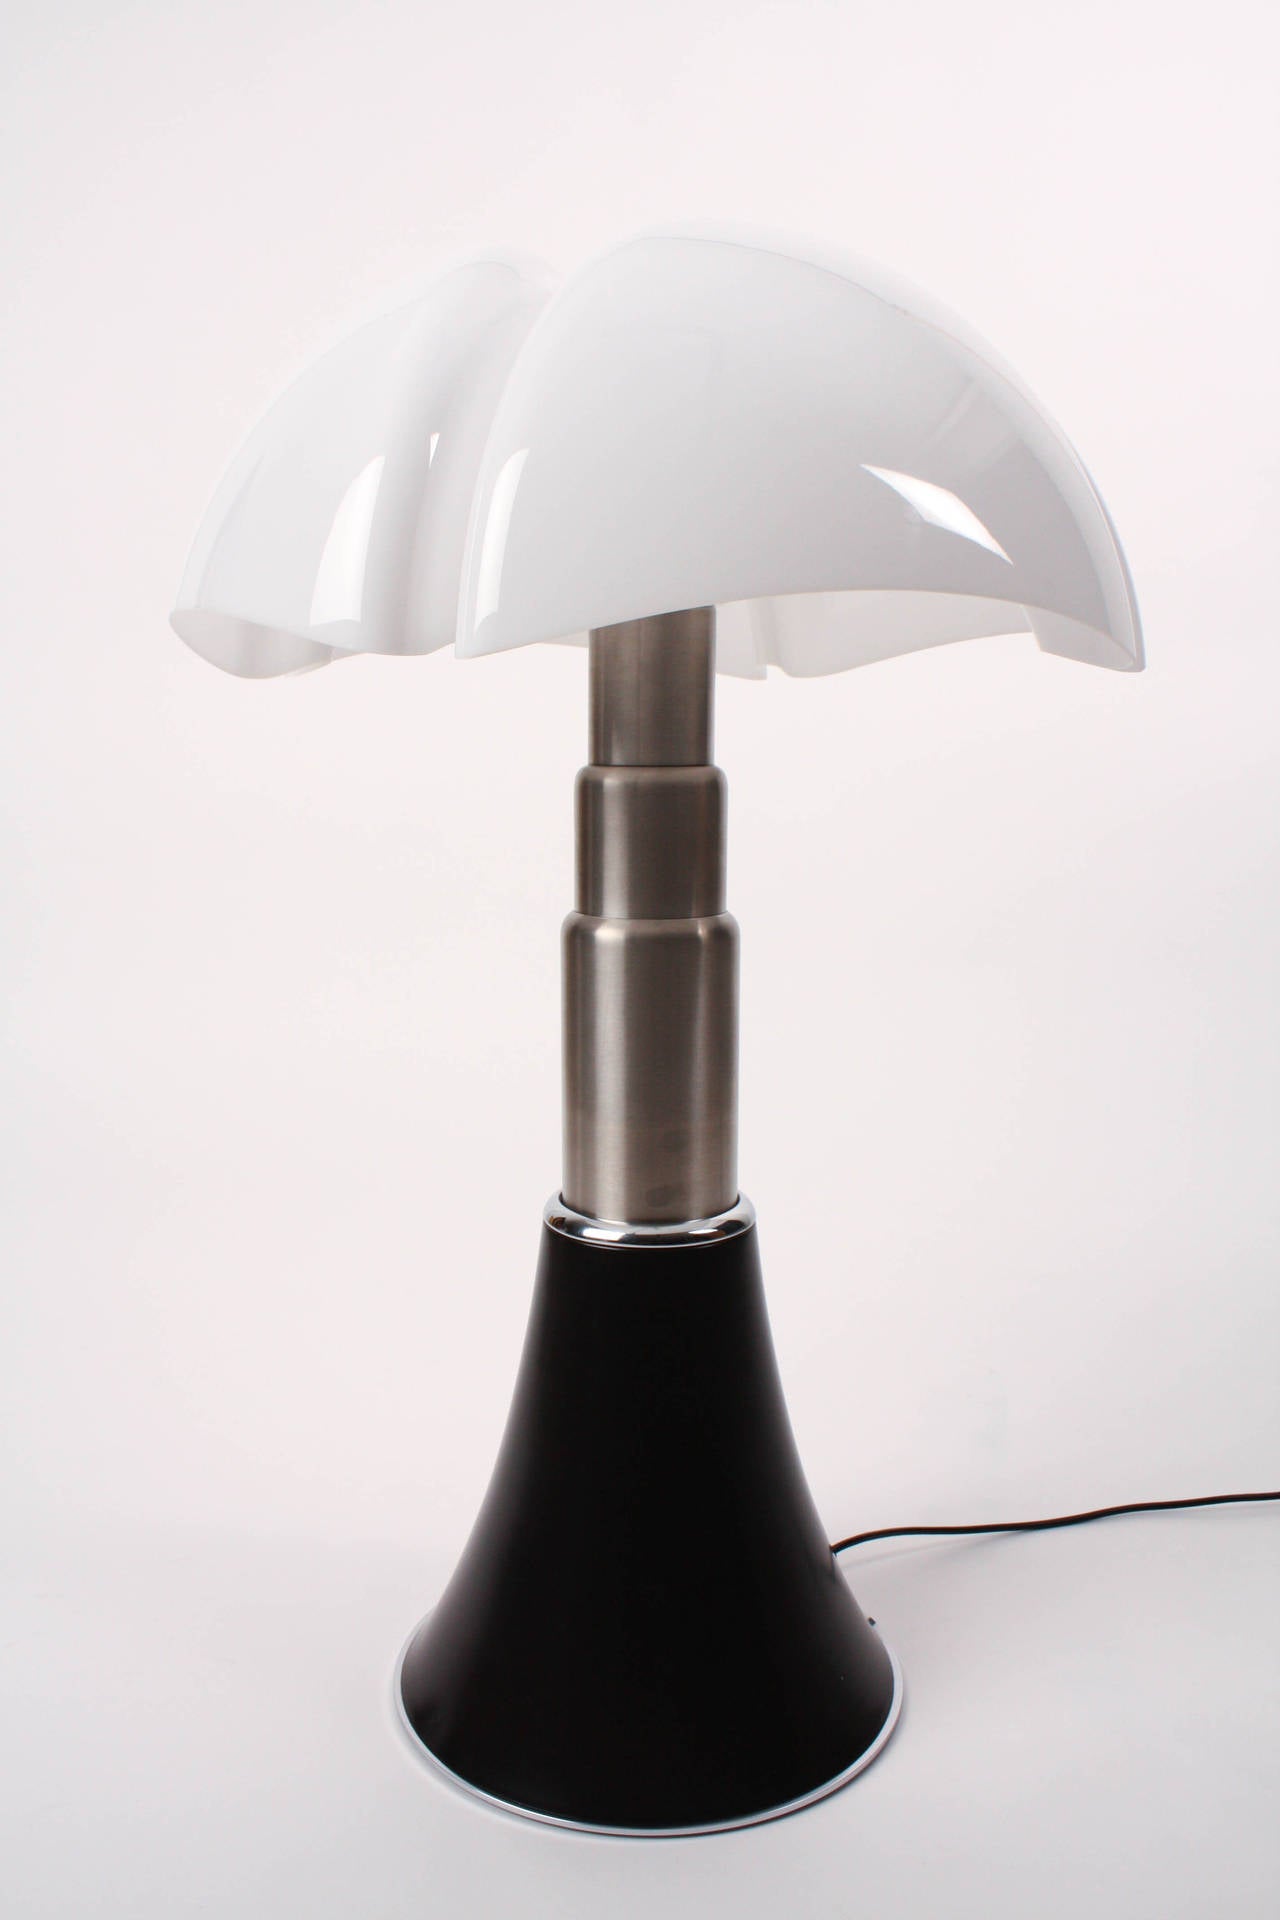 Italian Pipistrello Lamp, Gae Aulenti